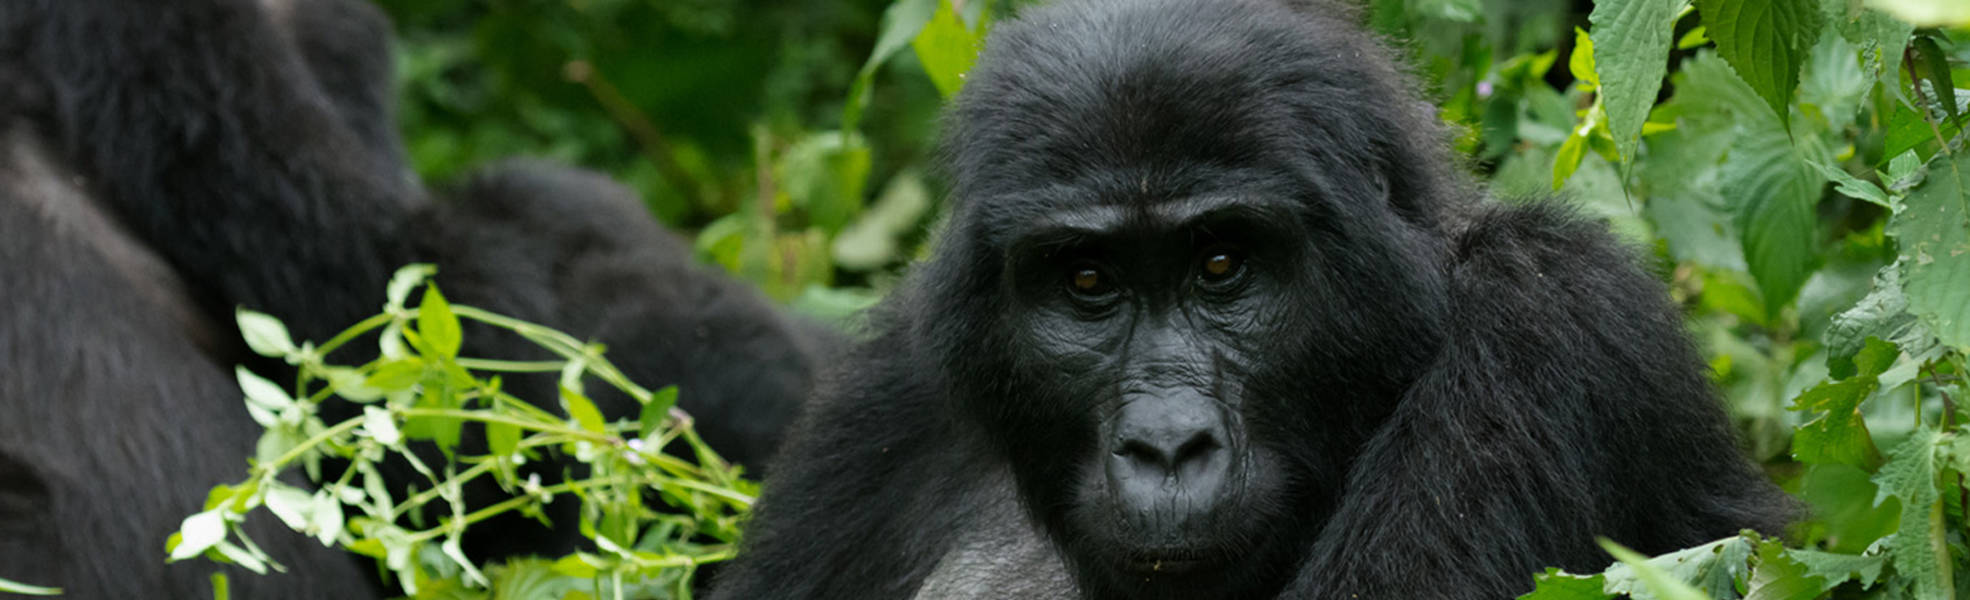 Freiwilligenarbeit mit Gorillas in Uganda